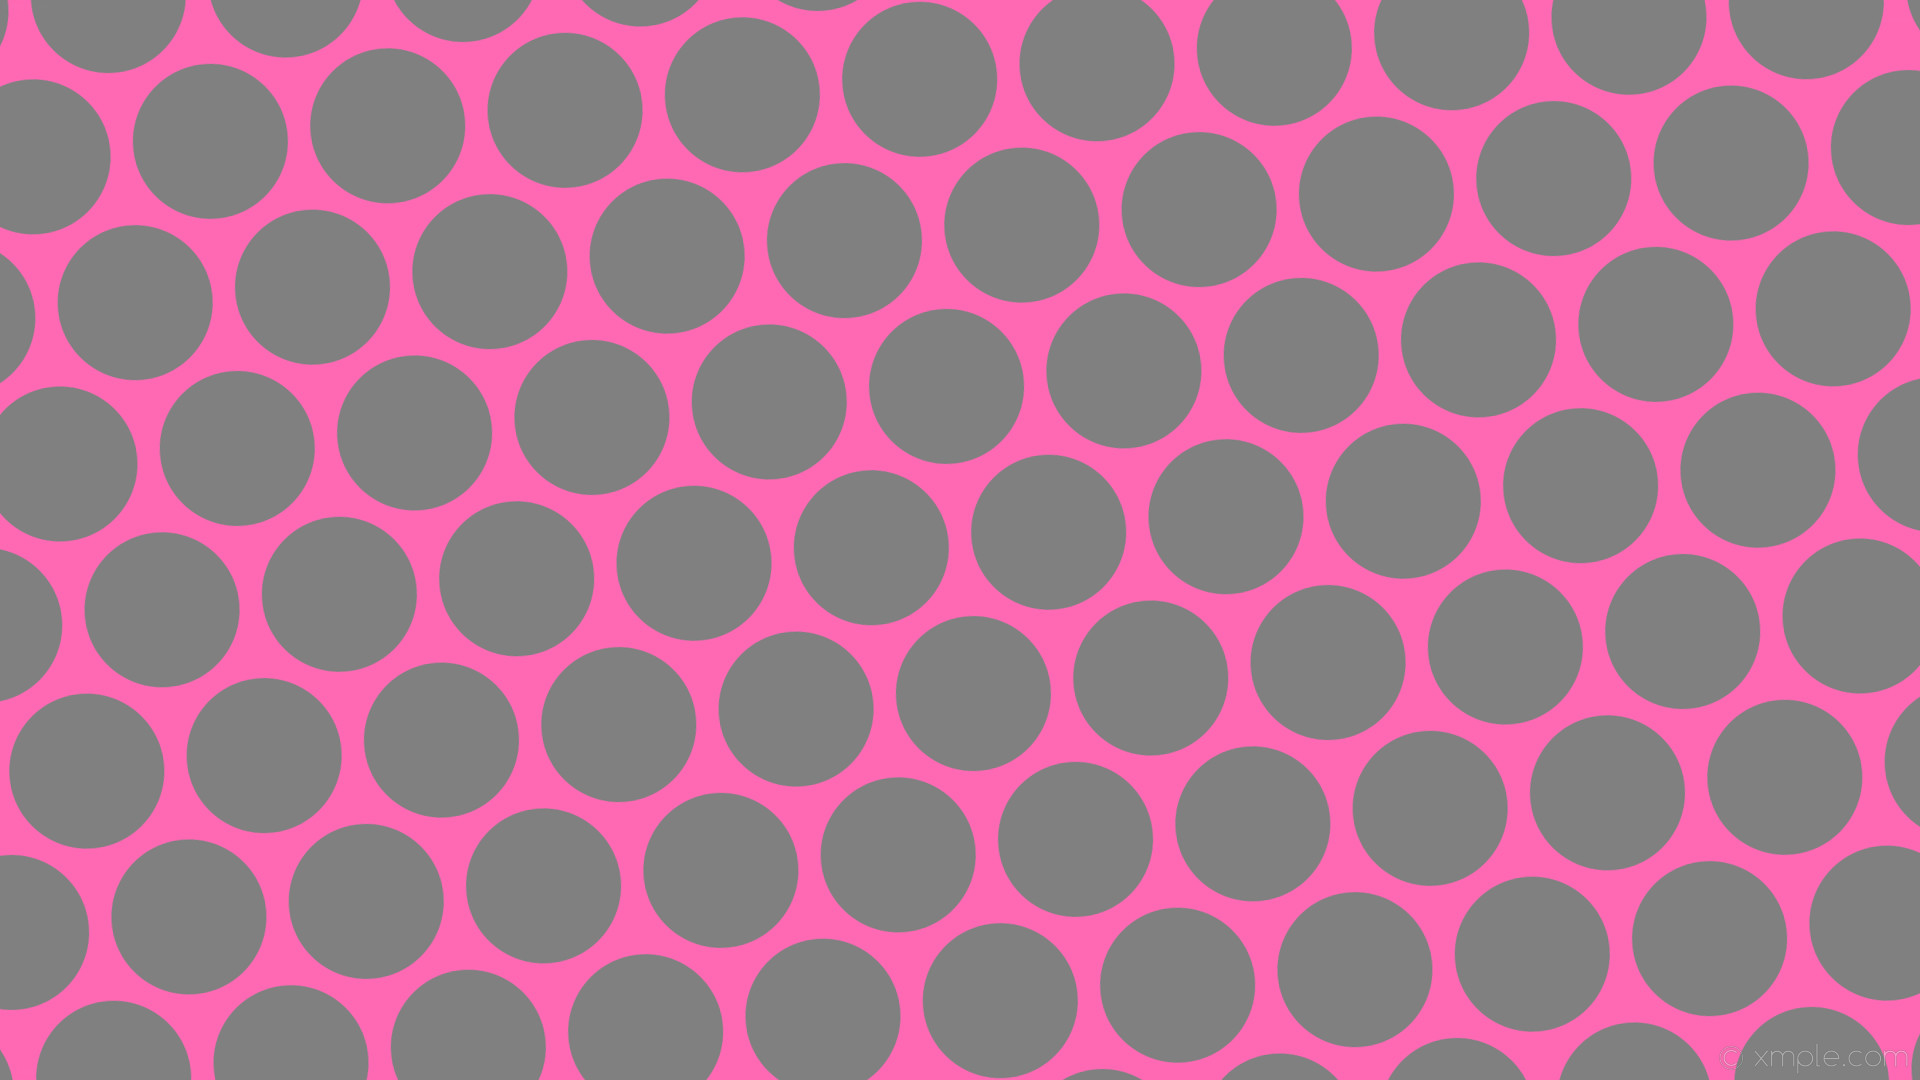 1920x1080 wallpaper hexagon dots polka pink grey hot pink gray #ff69b4 #808080  diagonal 5Â°